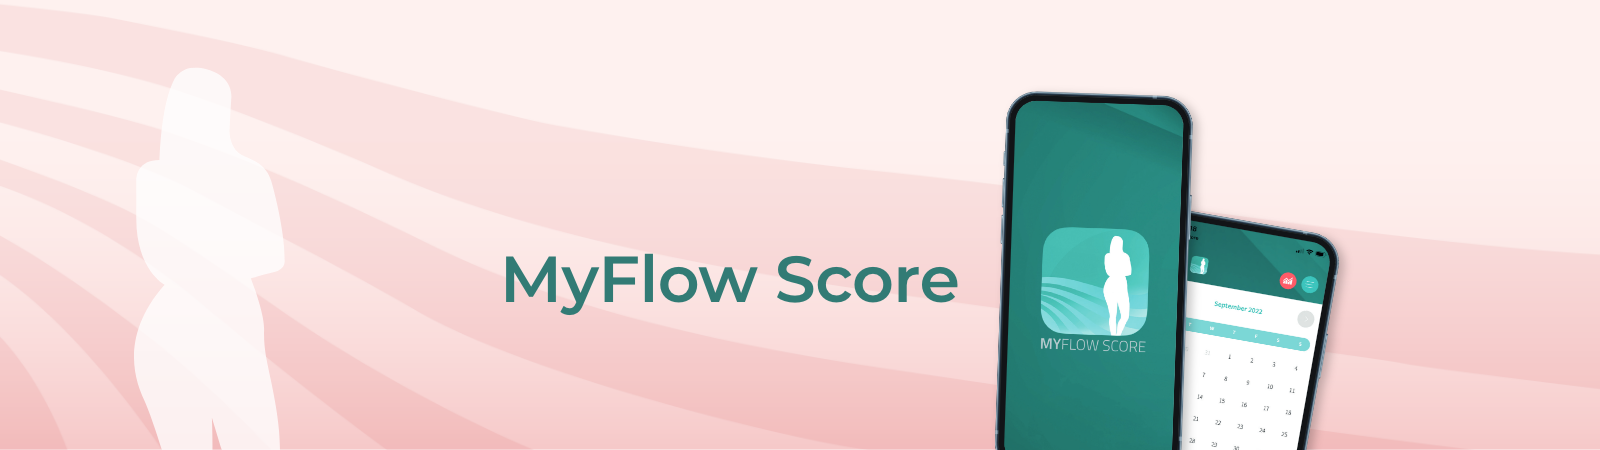 MyFLow Score Hero